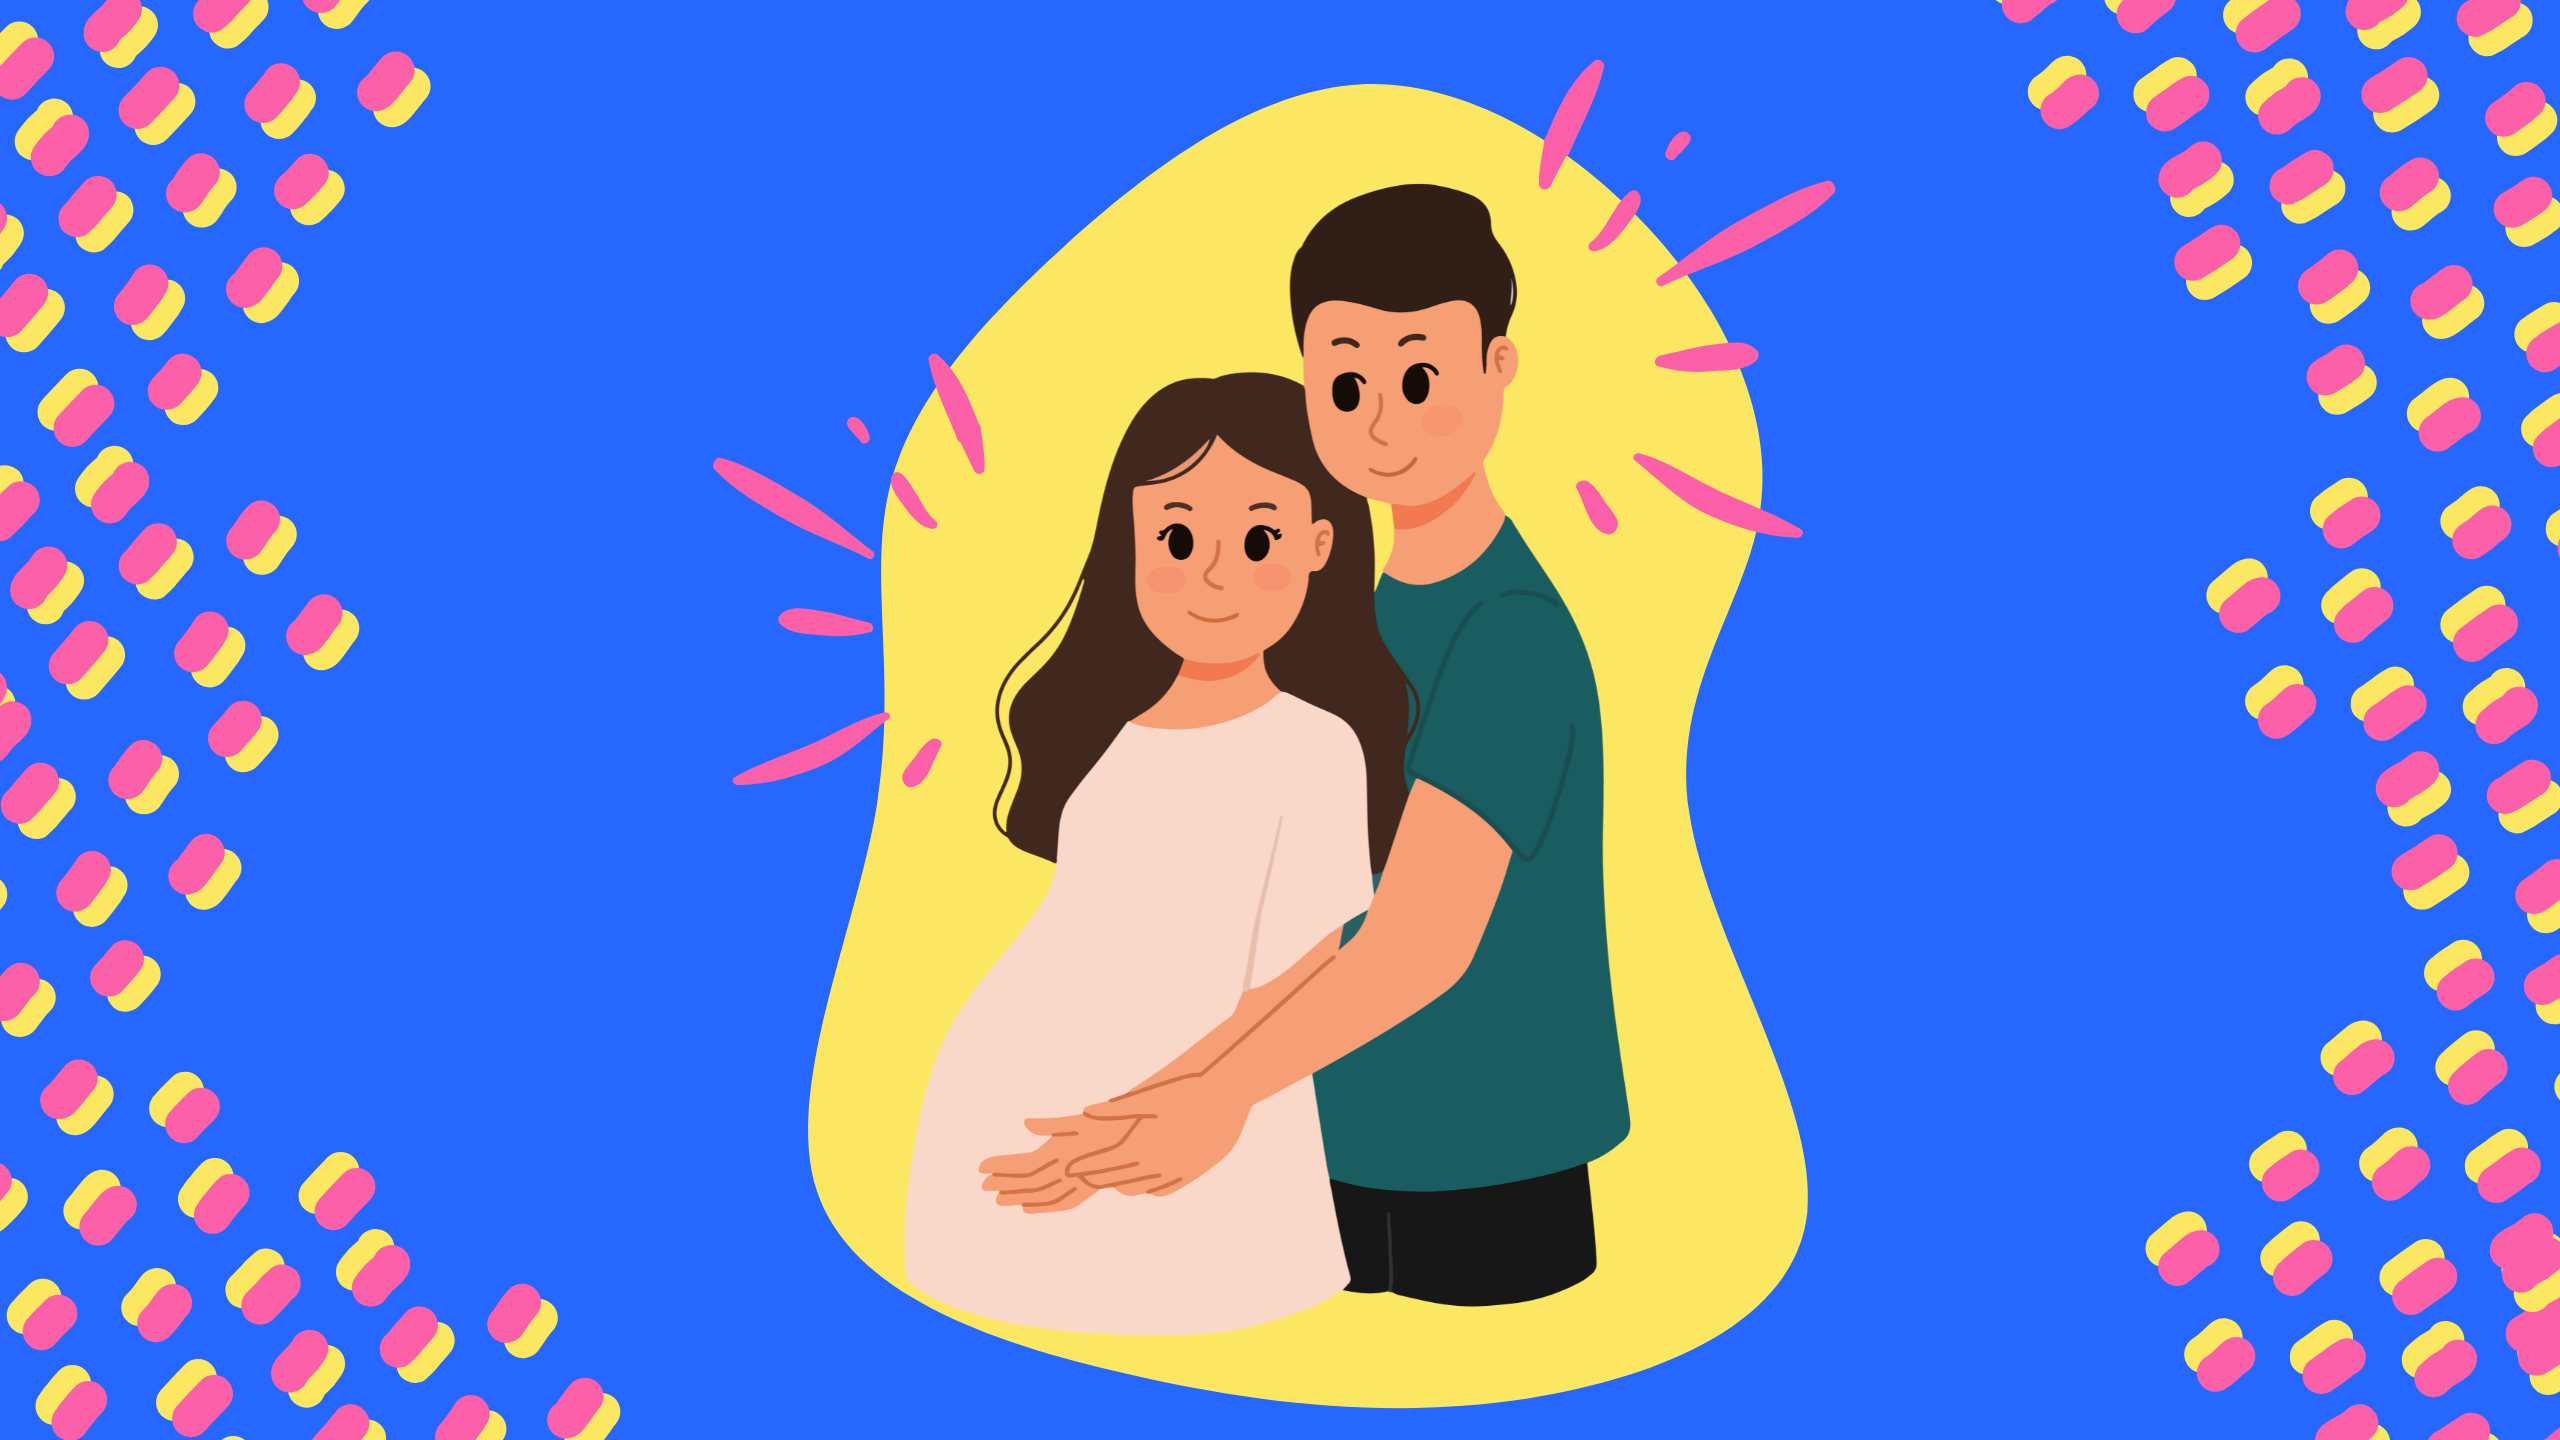 Fertility solutions: a happy pregnant couple